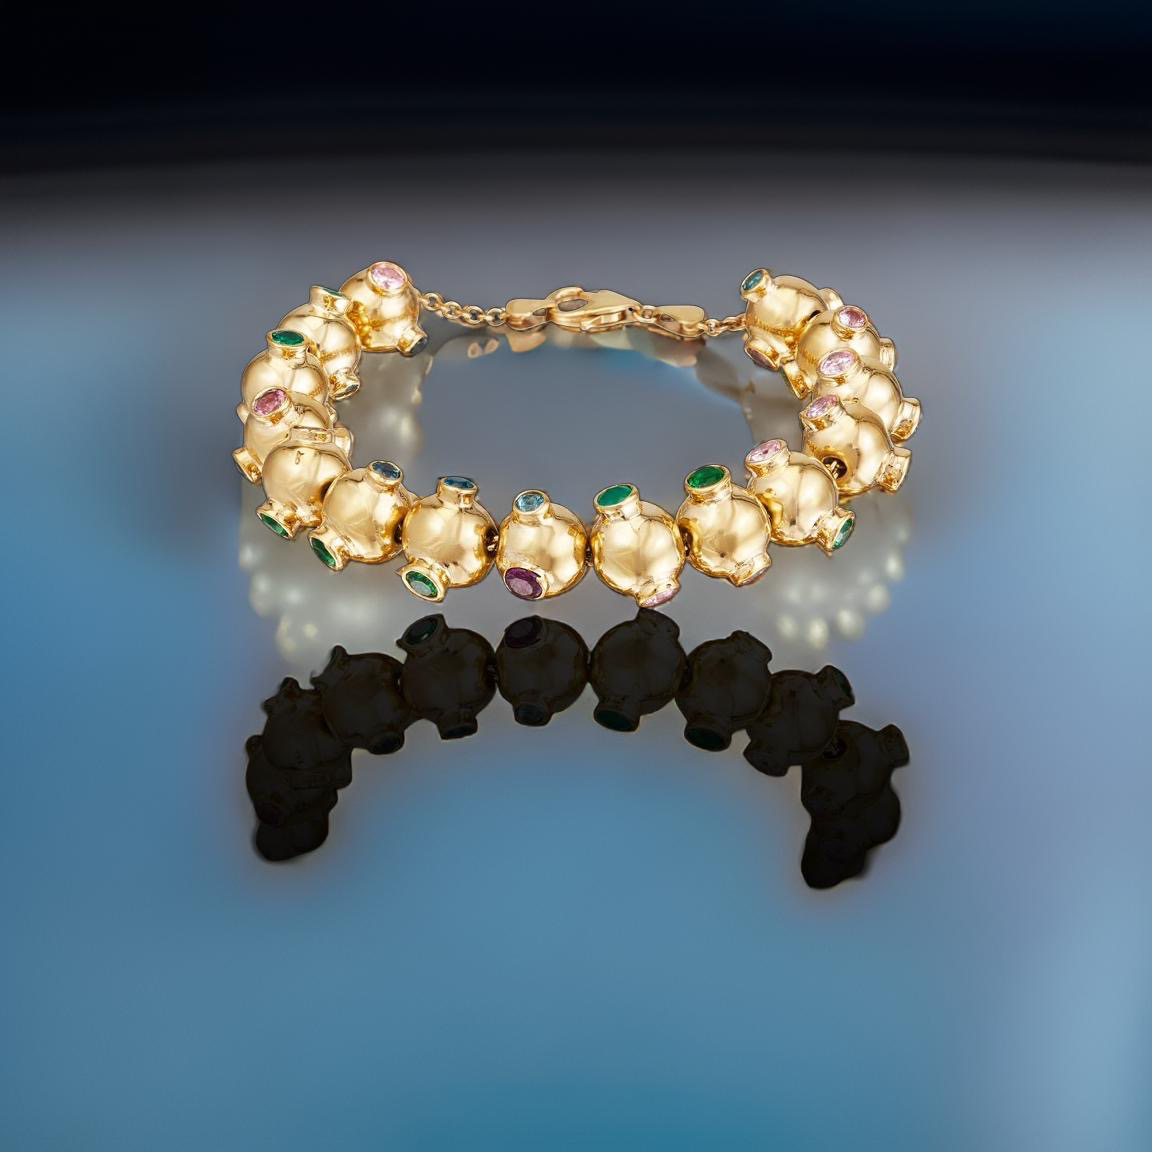 Chenille’ DNA 18ct yellow gold bracelet